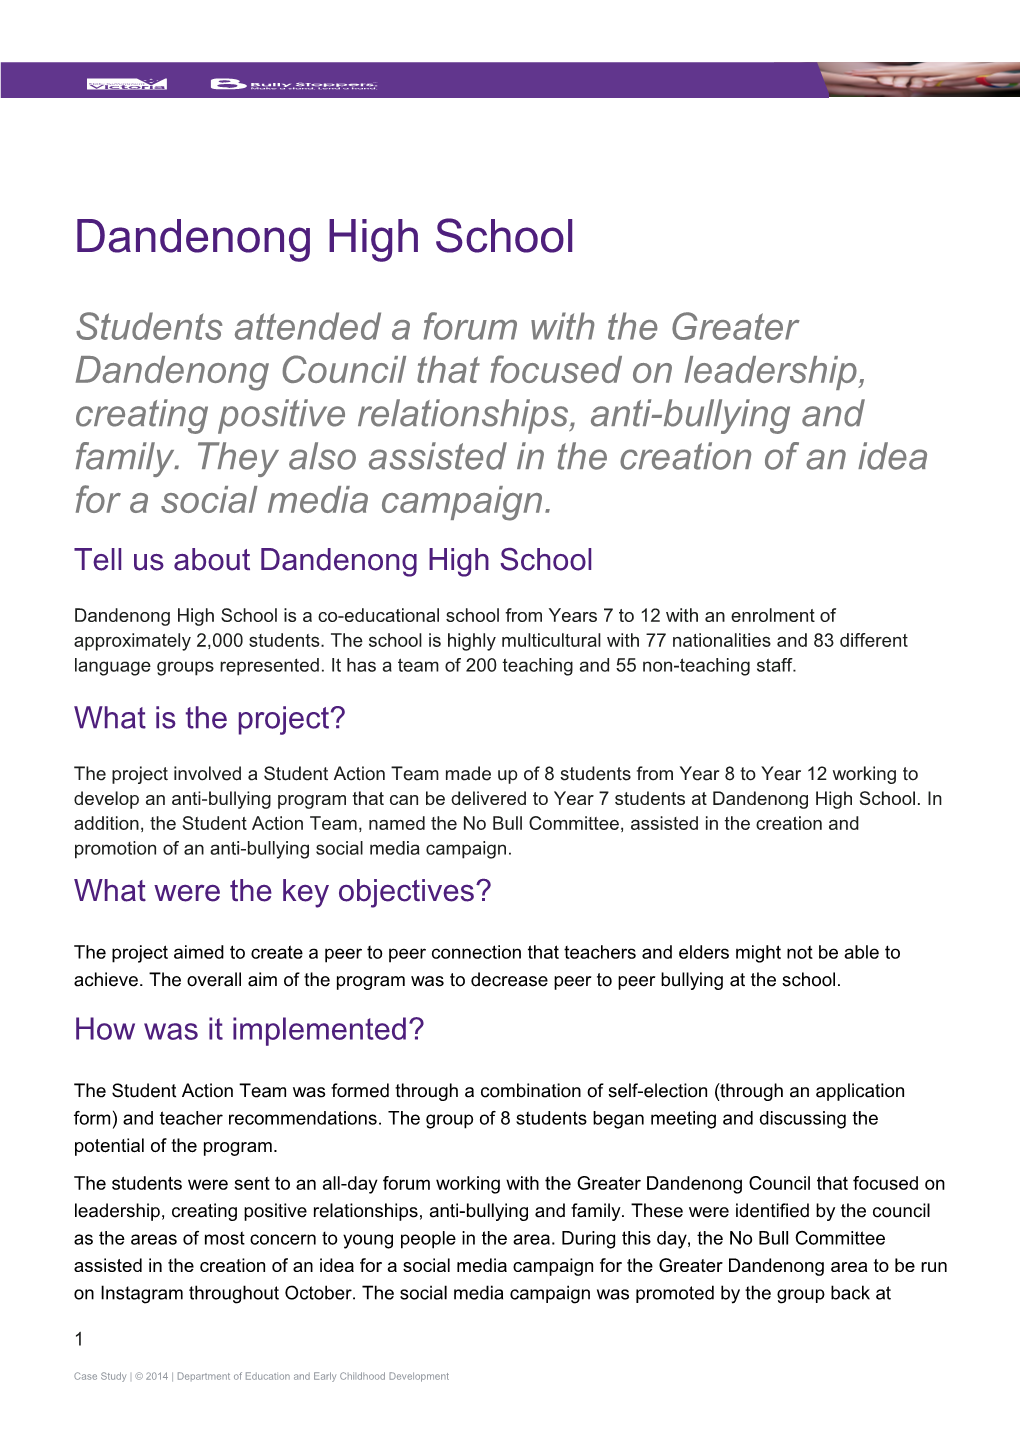 Dandenong High School Case Study